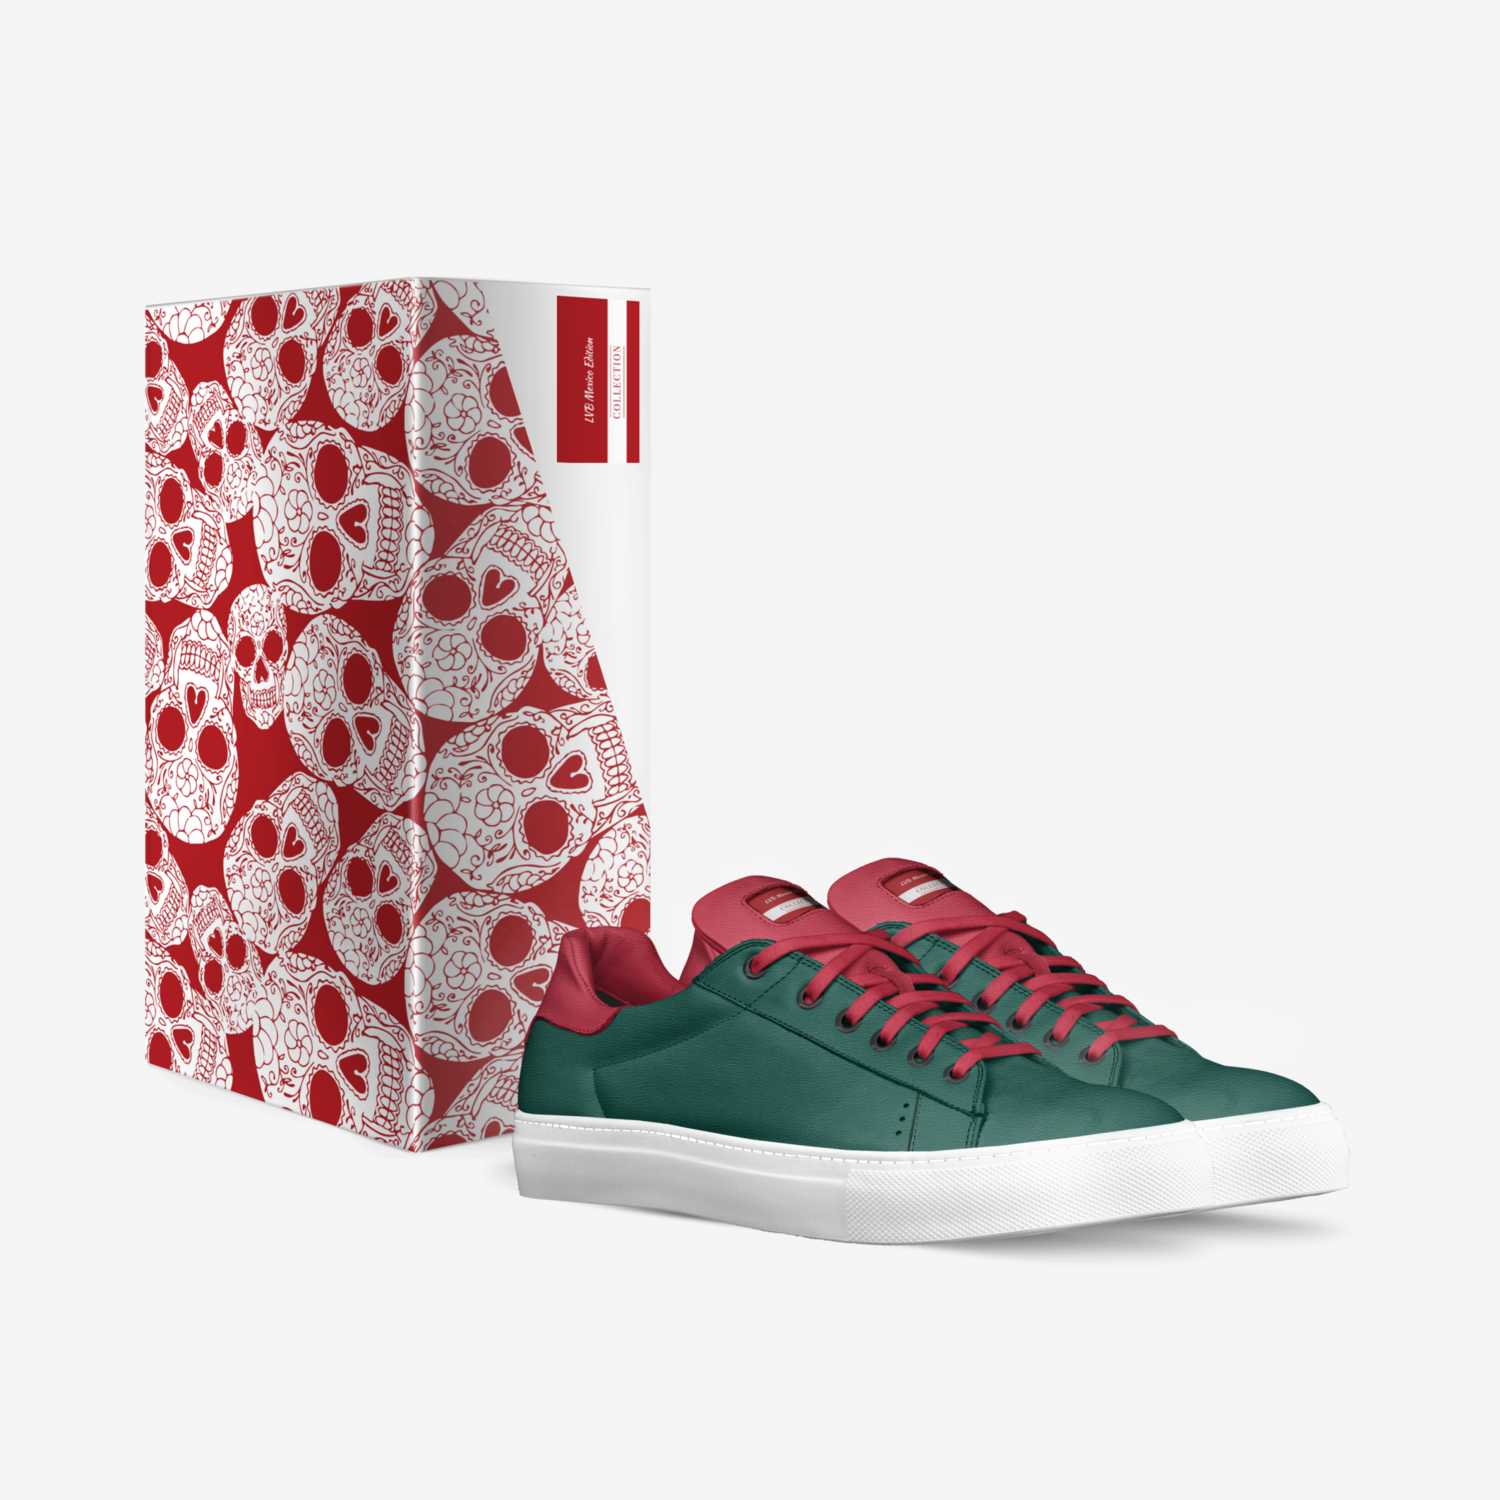 La Vida Buena custom made in Italy shoes by Zuriel Suarez | Box view